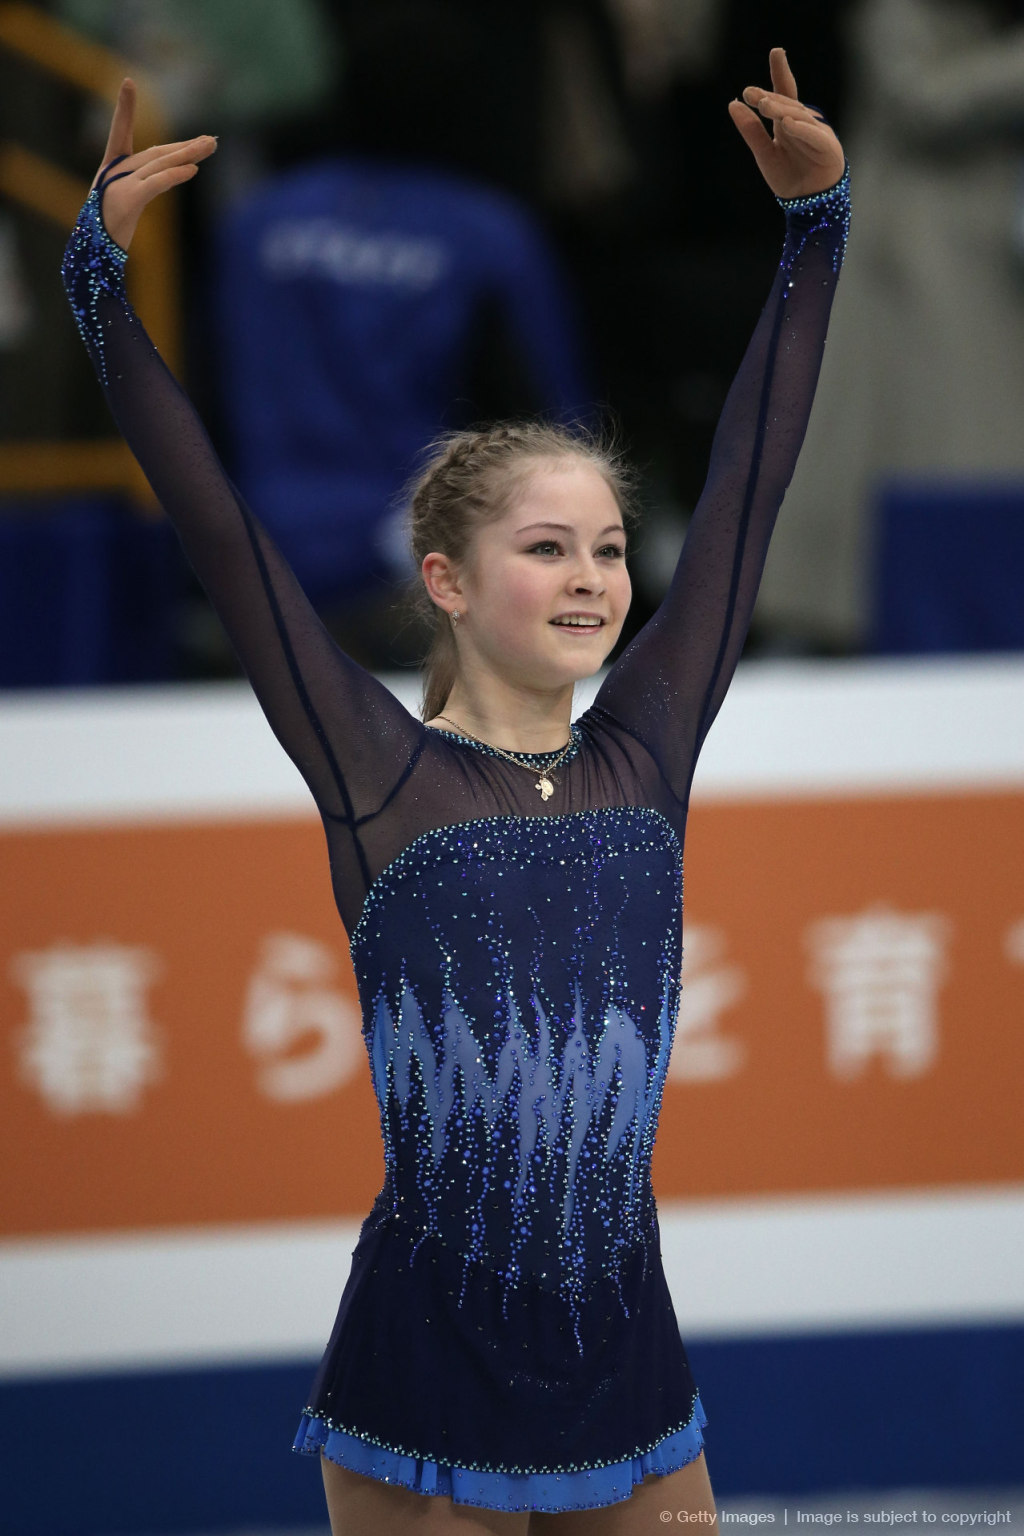 ISU World Figure Skating Championships 2014 — DAY 2